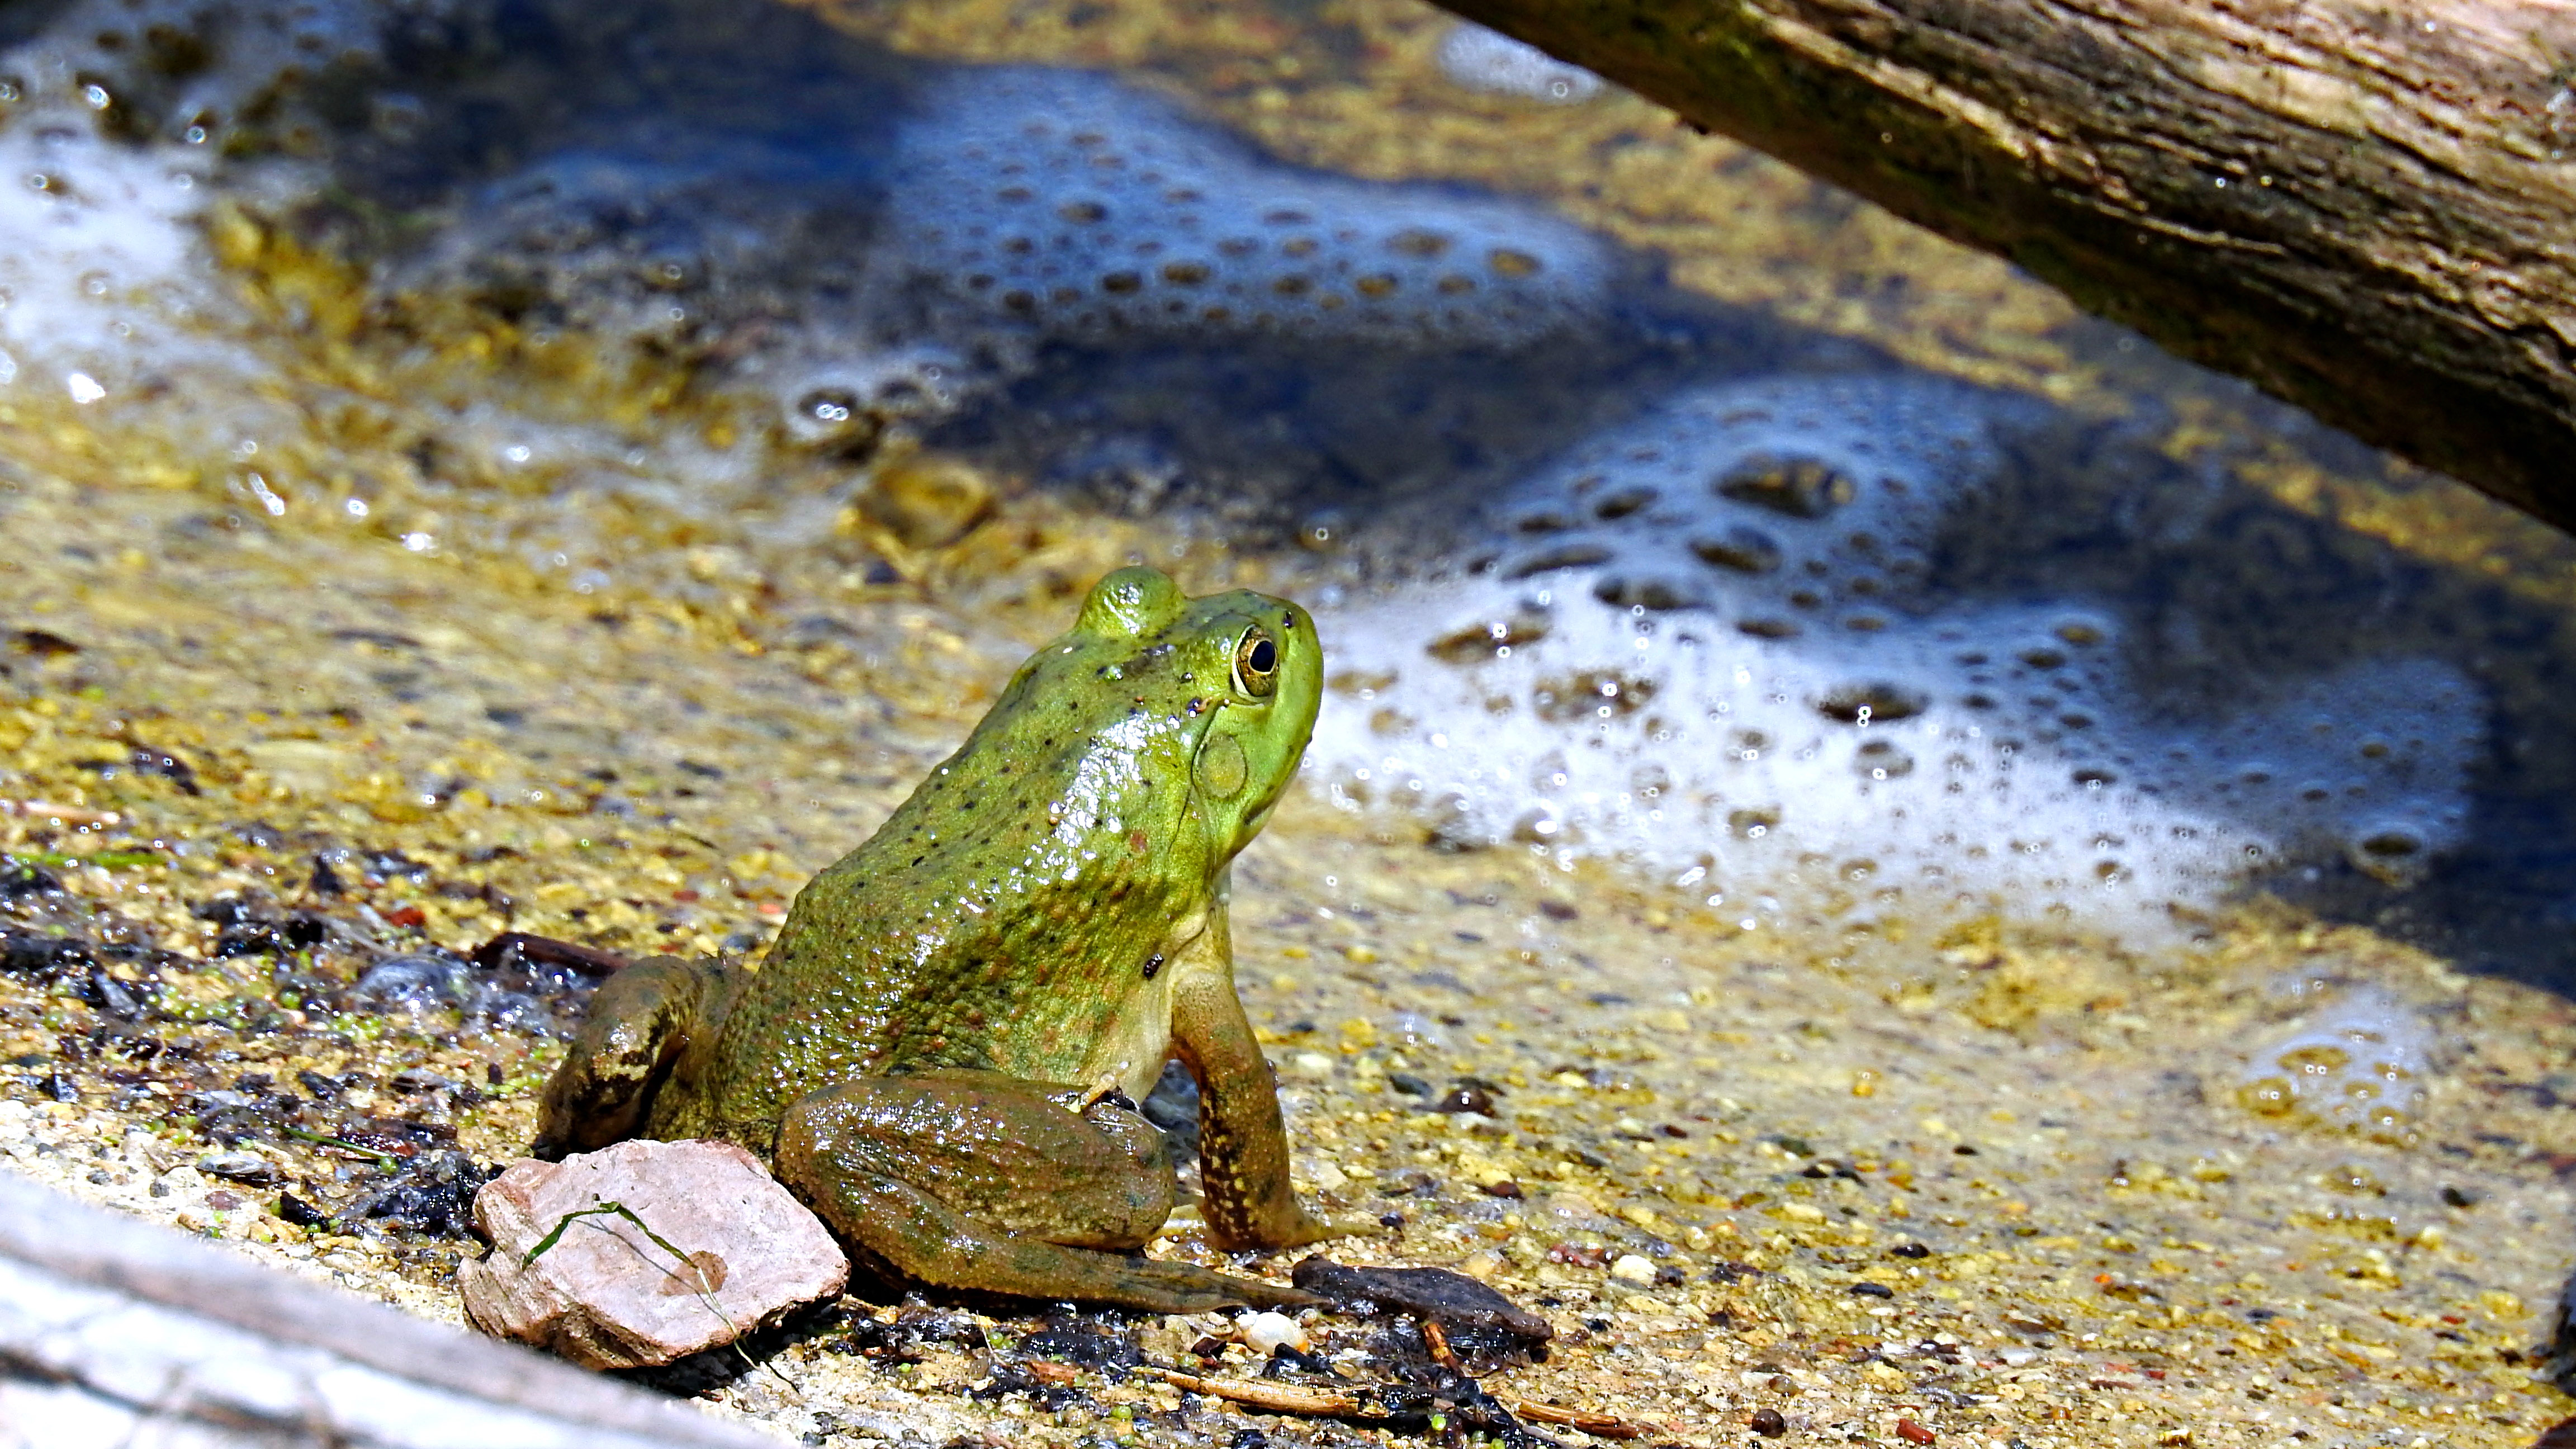 Bullfrog at the pond enjoying the sunshine